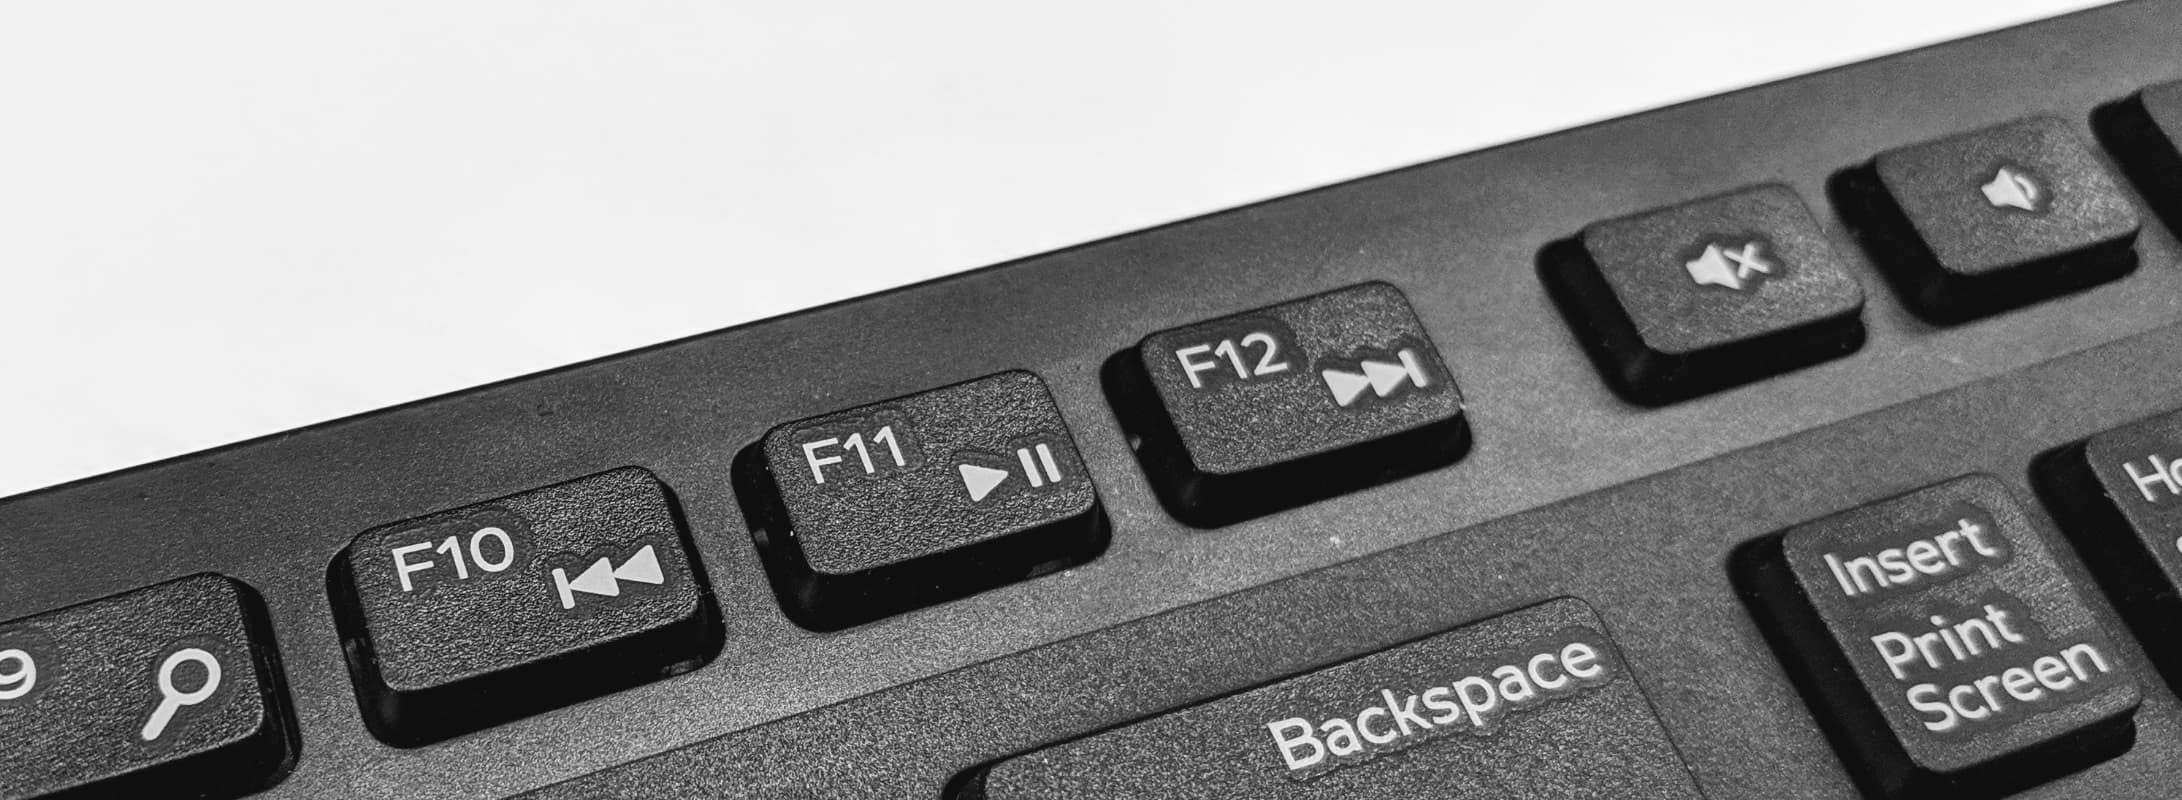 Keyboard media keys